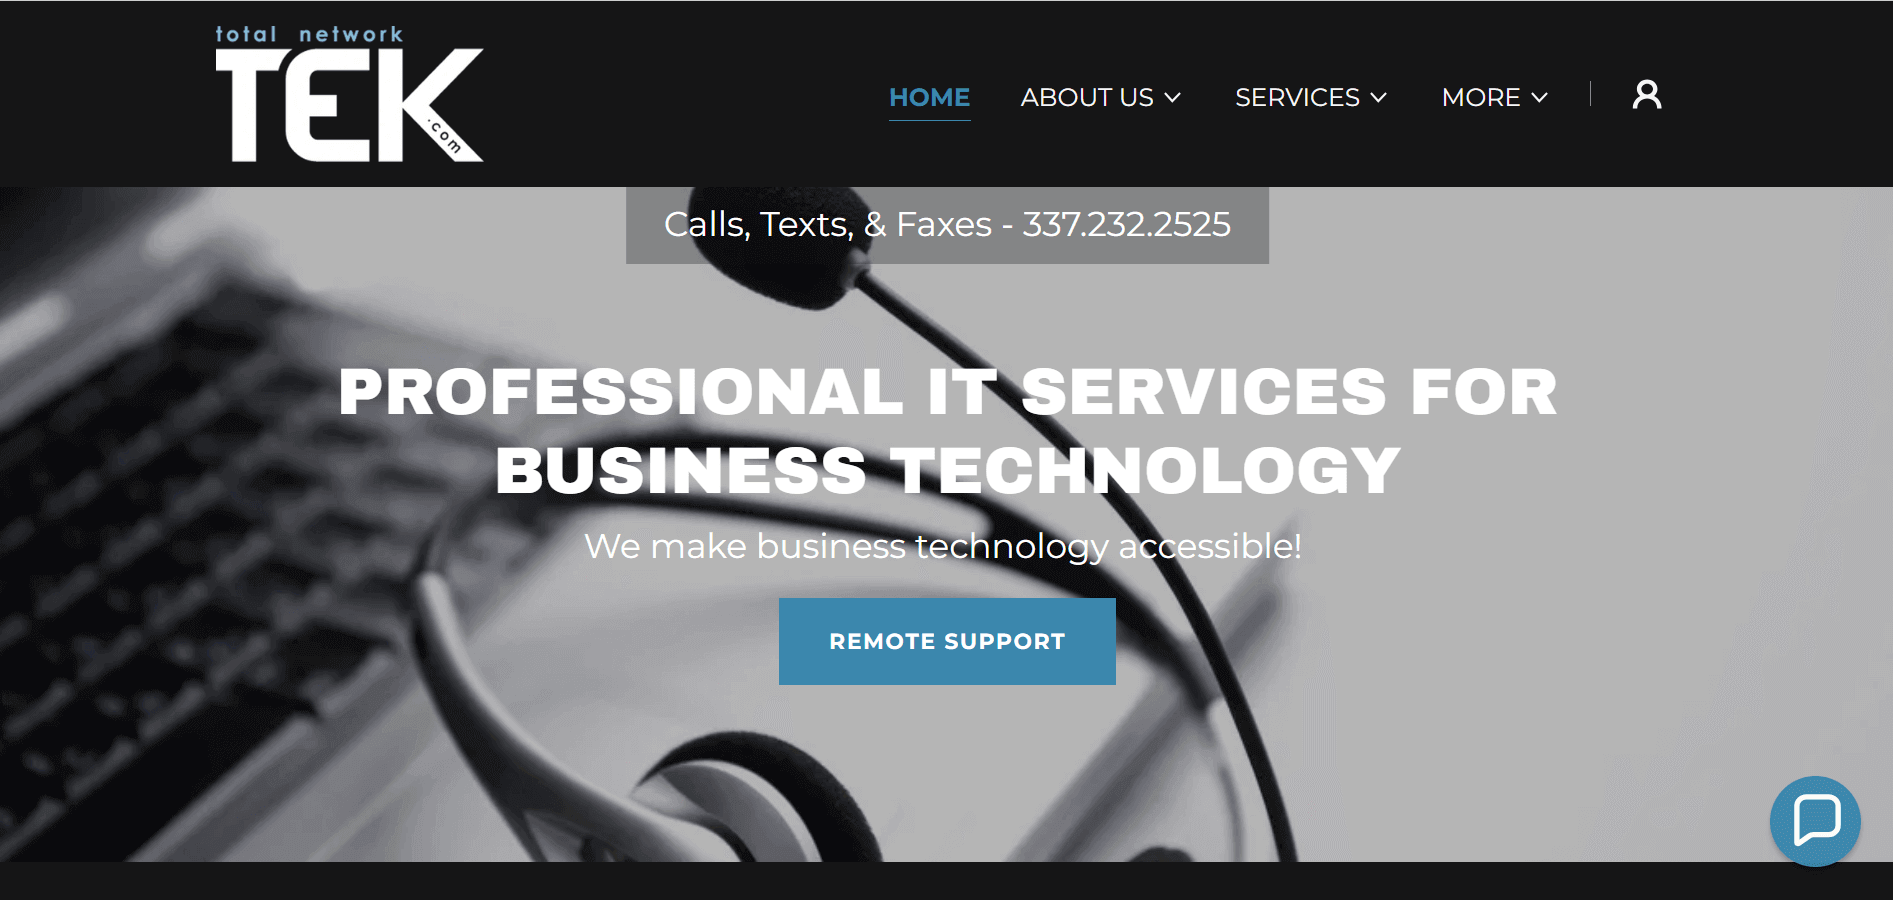 Total Network Technologies’s website